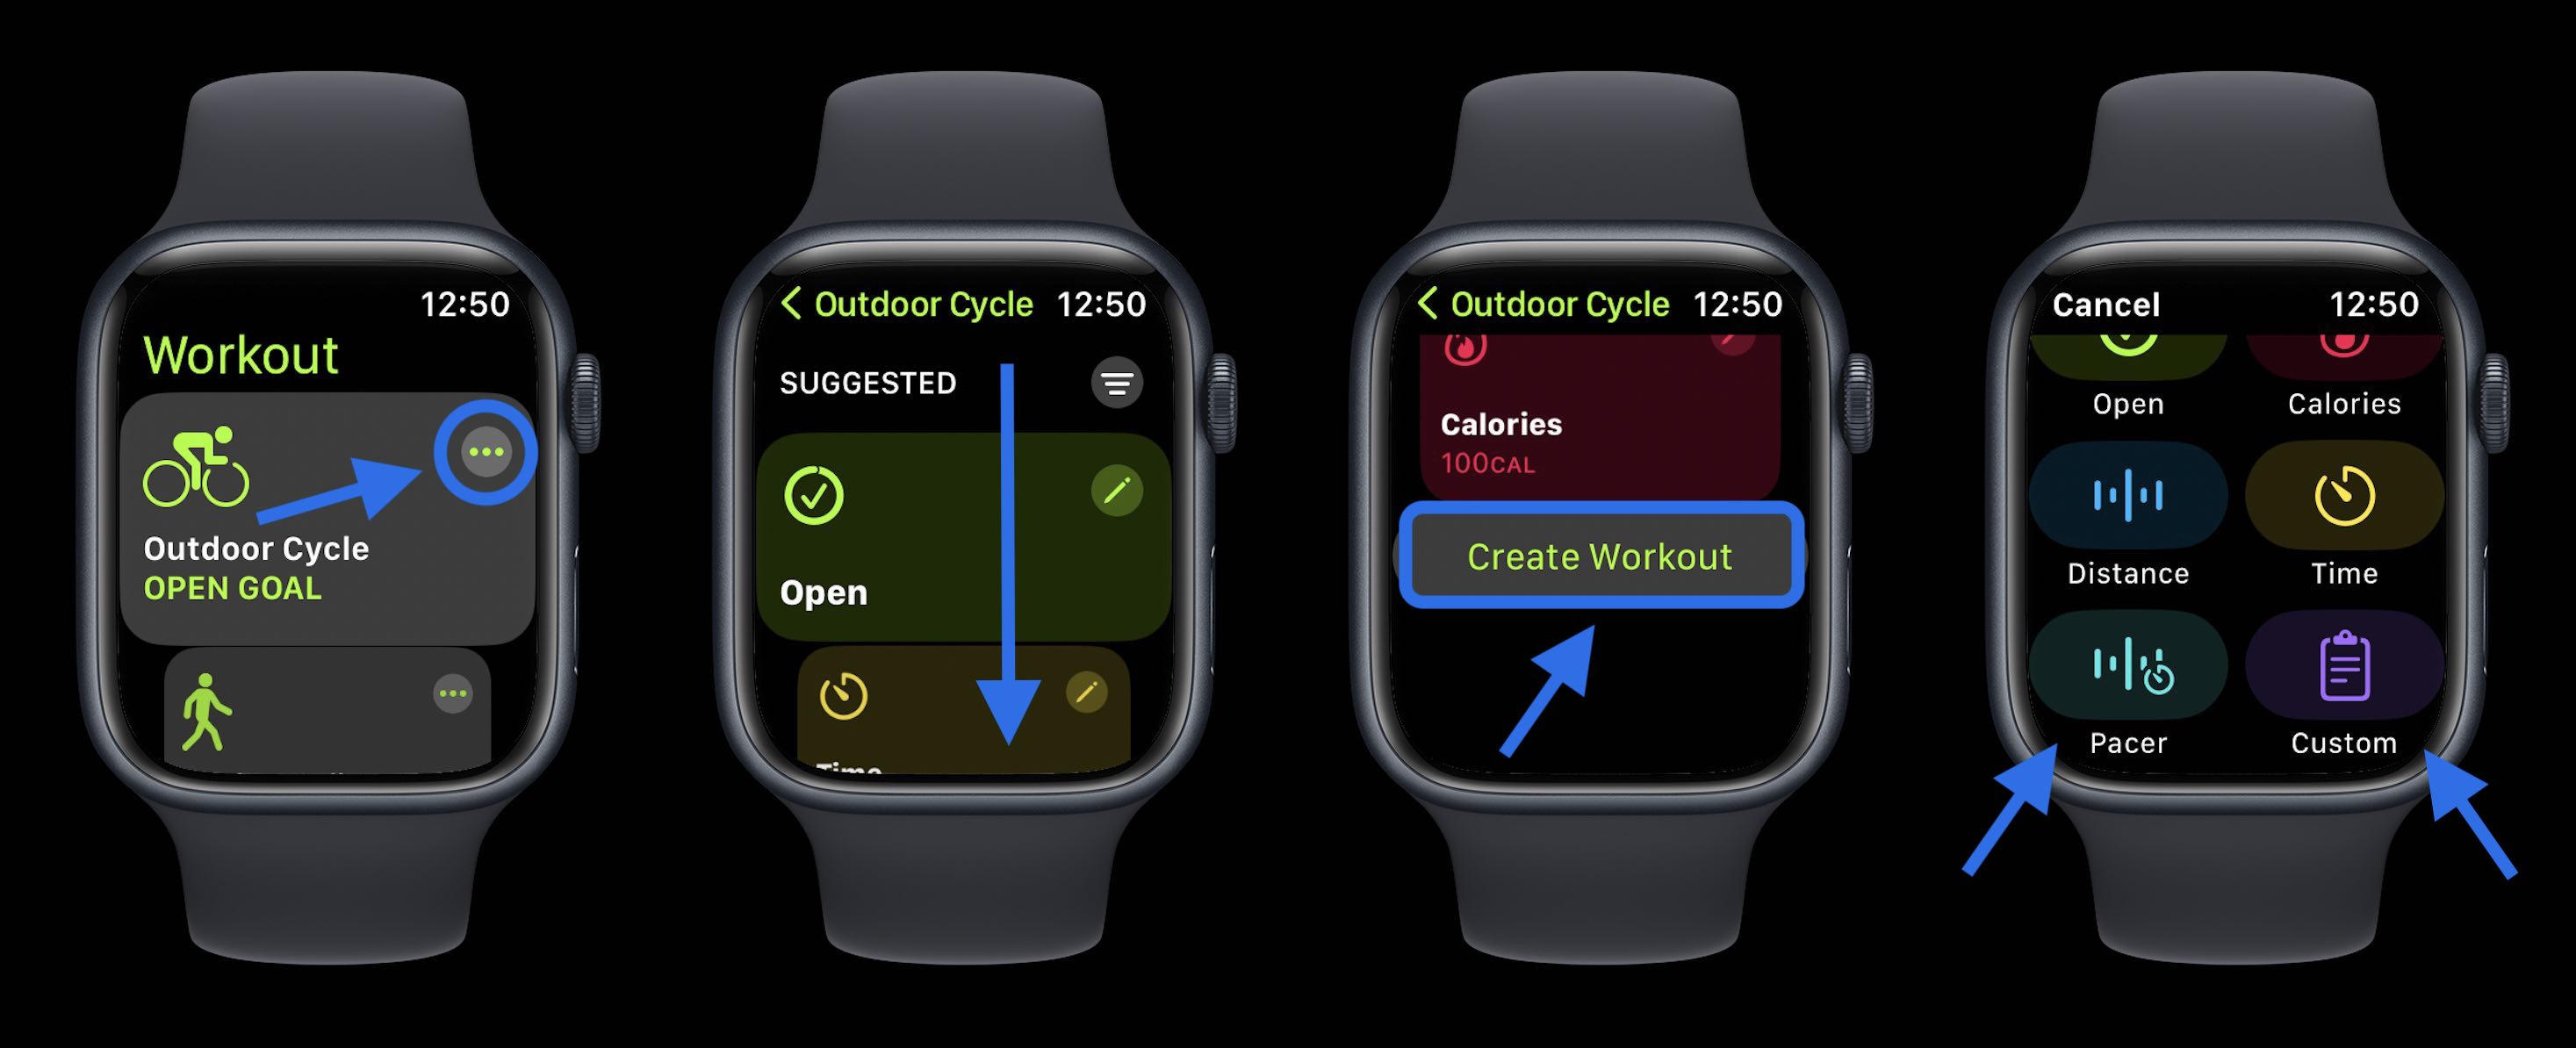 Apple Watch cycling metrics